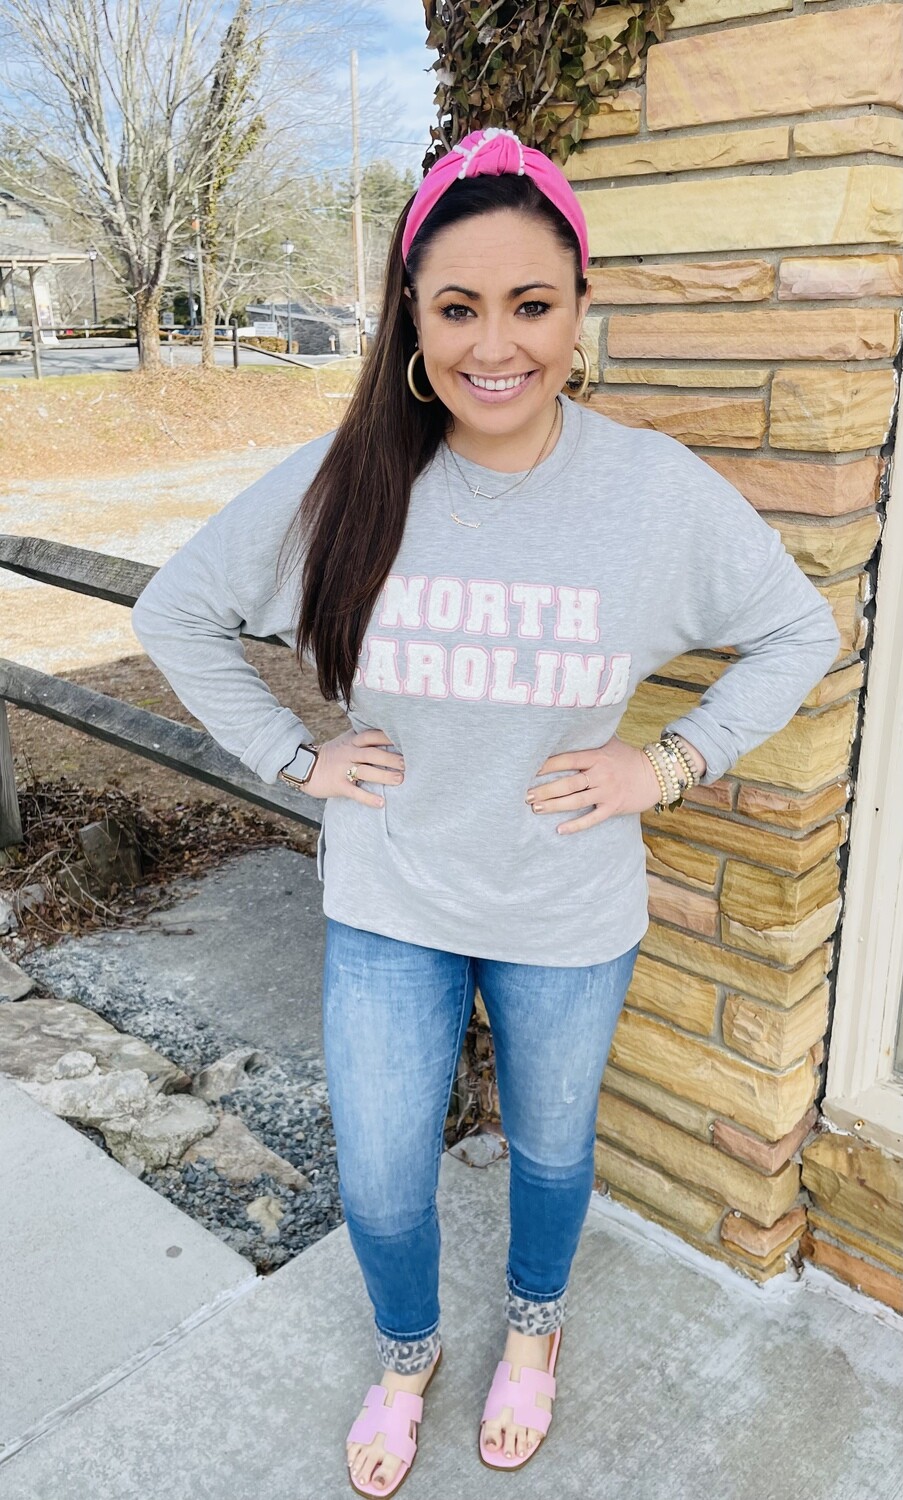 The North Carolina Sweatshirt